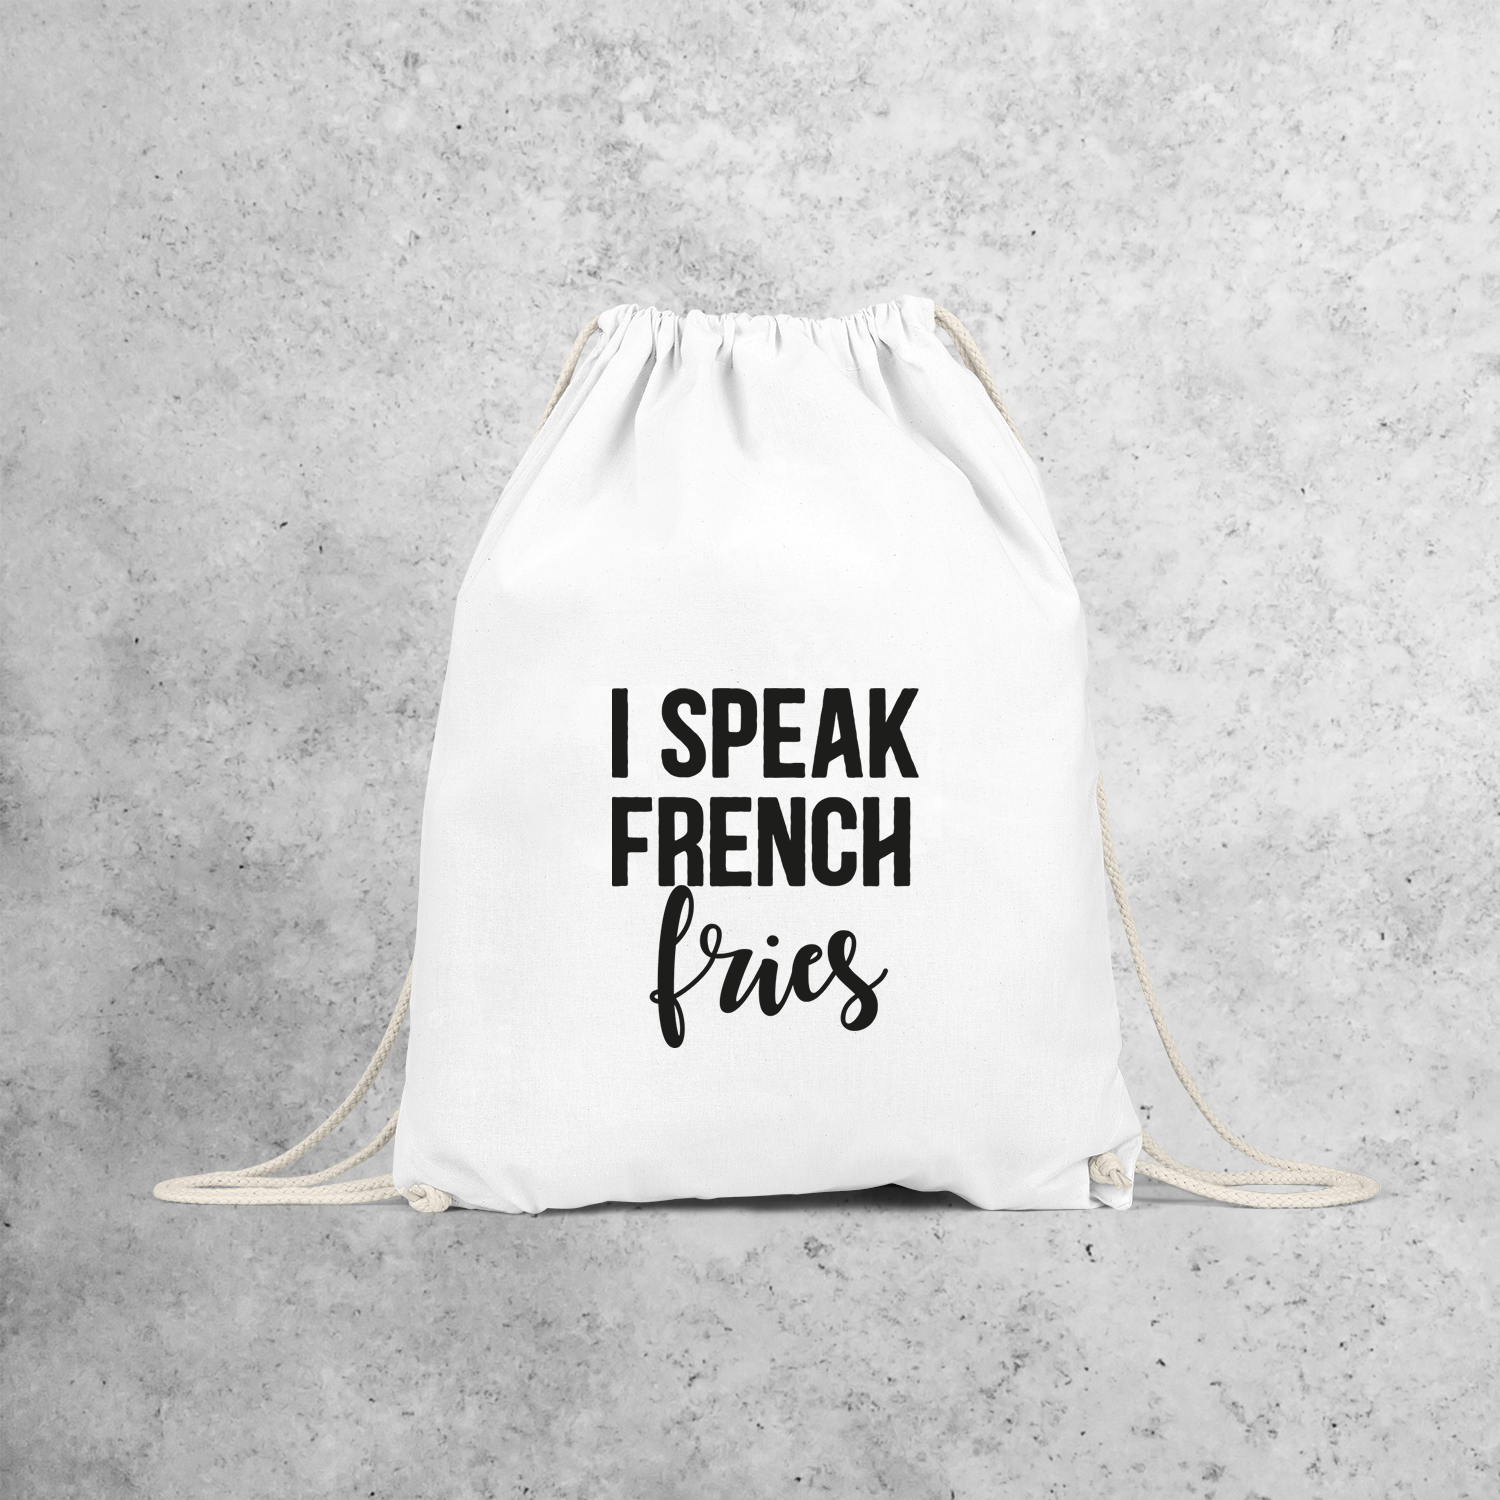 'I speak French fries' backpack